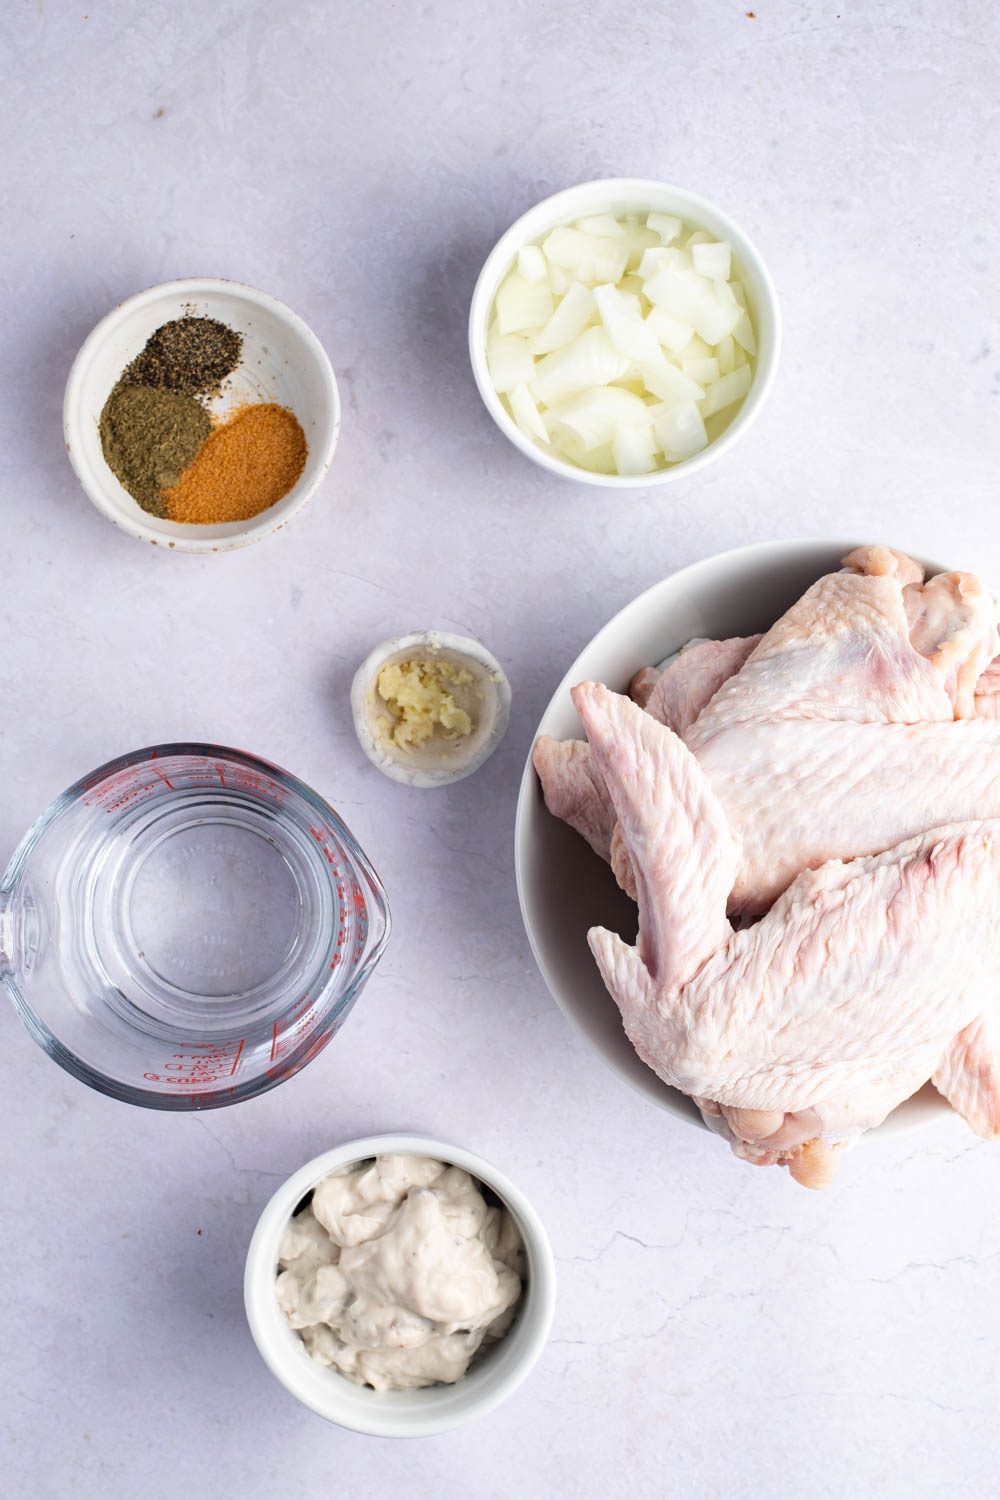 Baked Turkey Wings Ingredients - Turkey Wings, Salt, Poultry Seasoning, Black Pepper, Onion, Garlic, Soup and Water